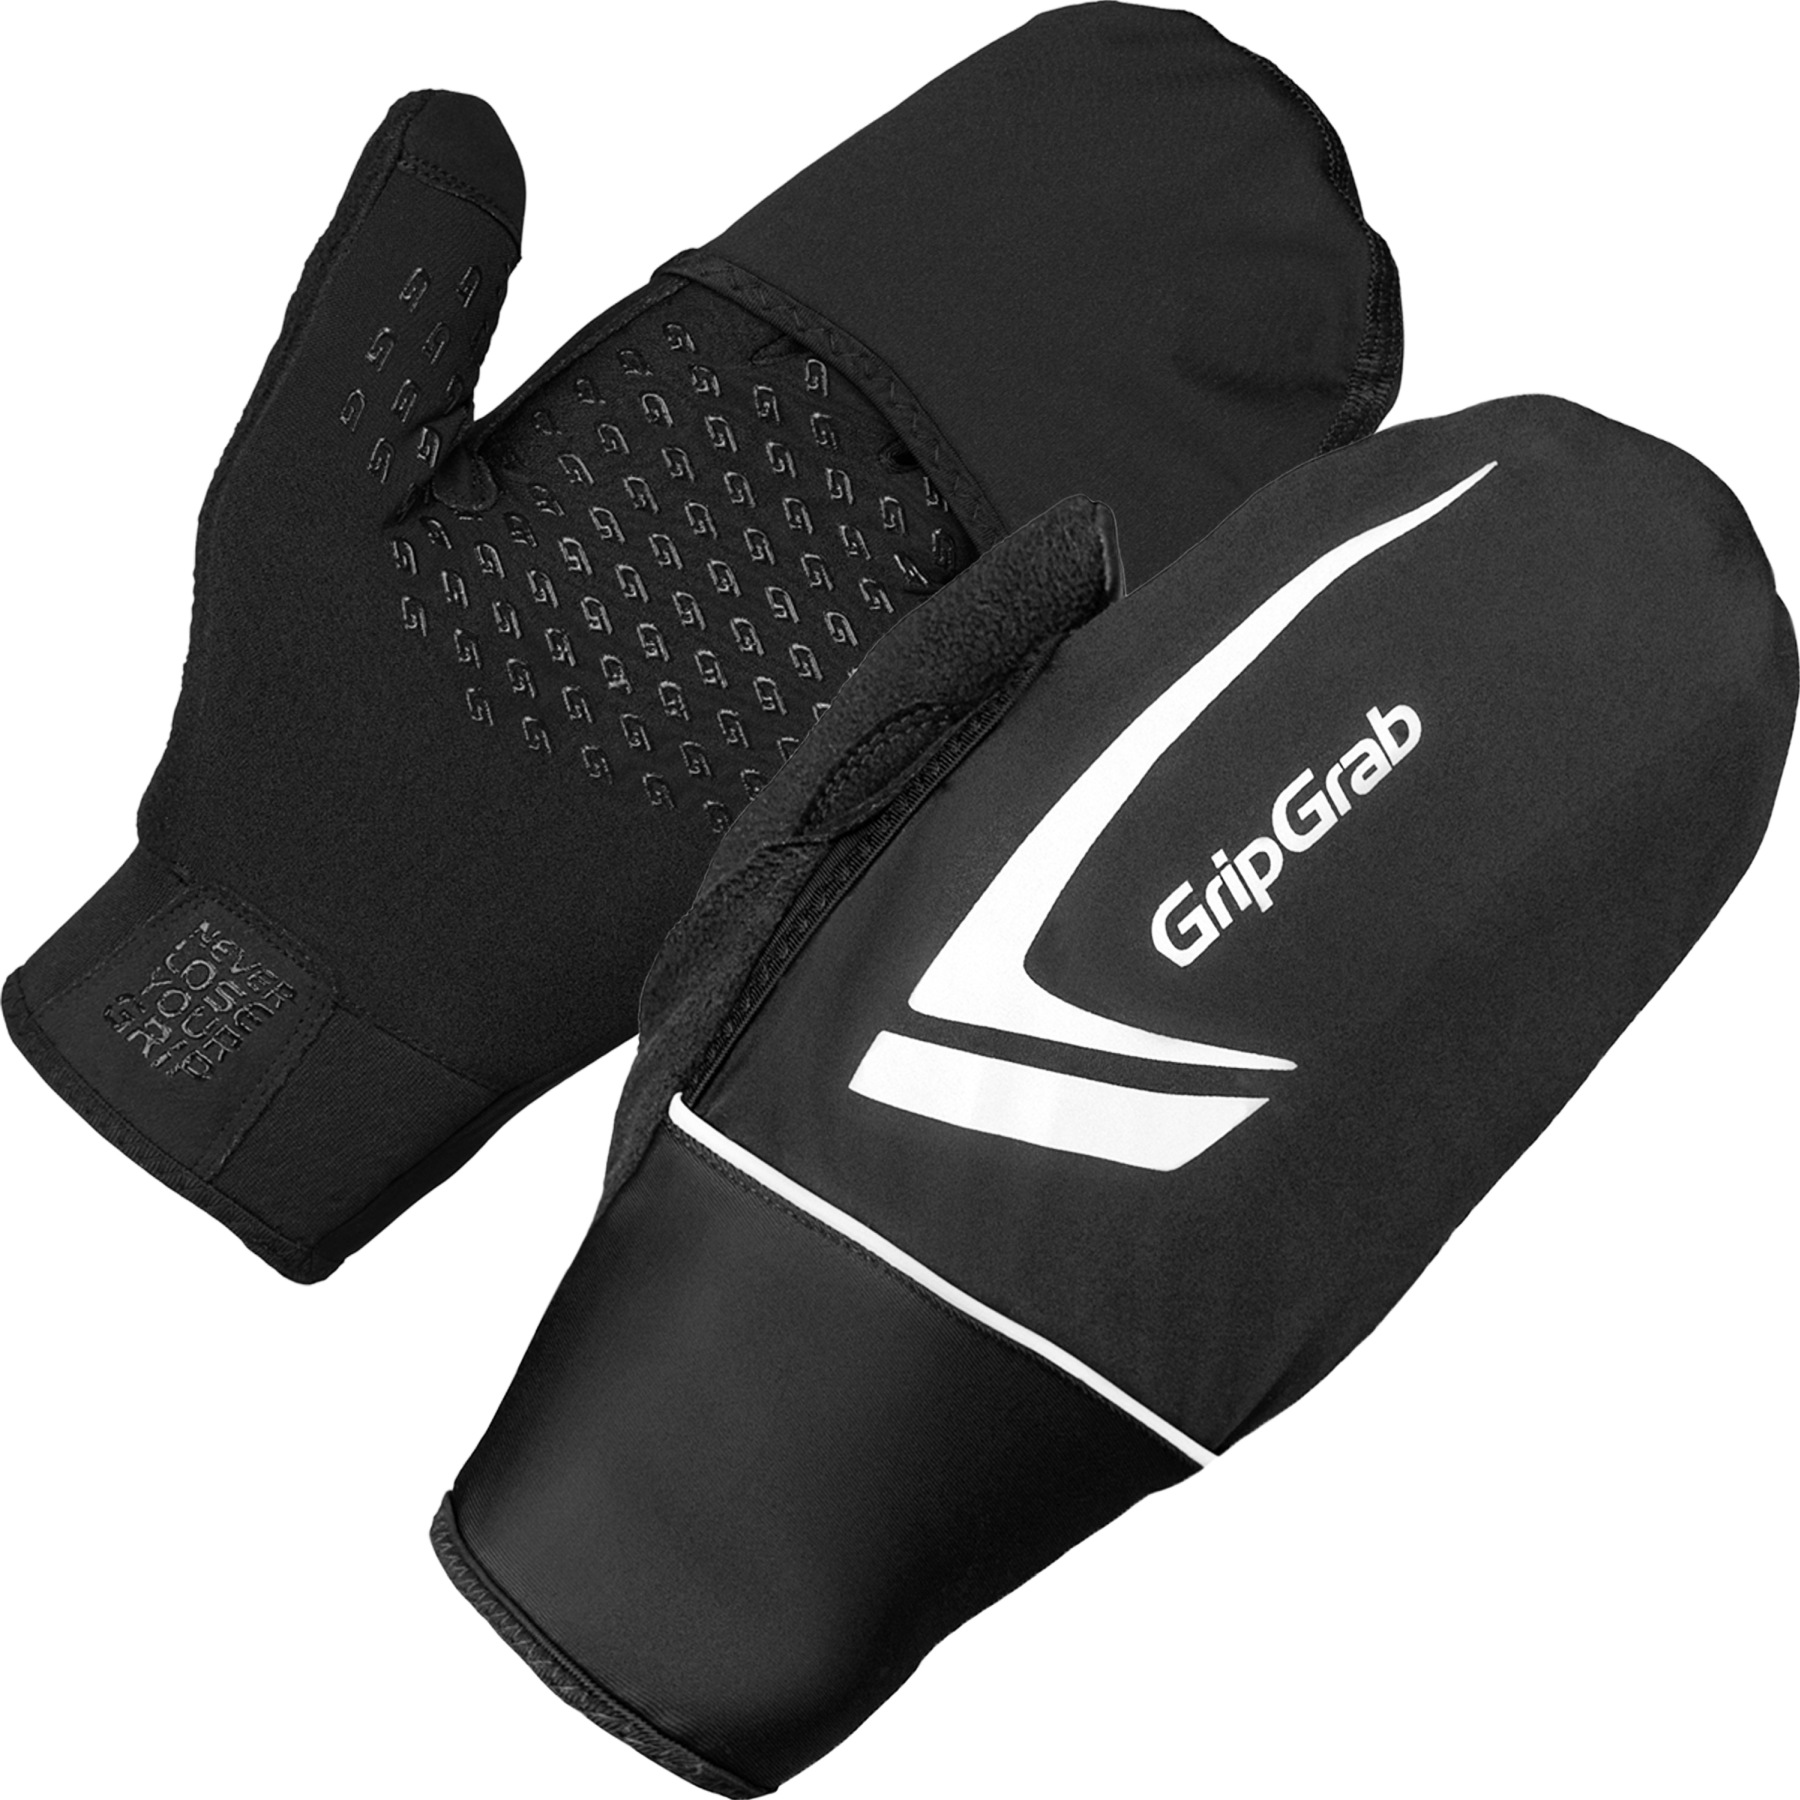 Productfoto van GripGrab Running Thermo Winddichte Touchscreen Handschoenen - Black